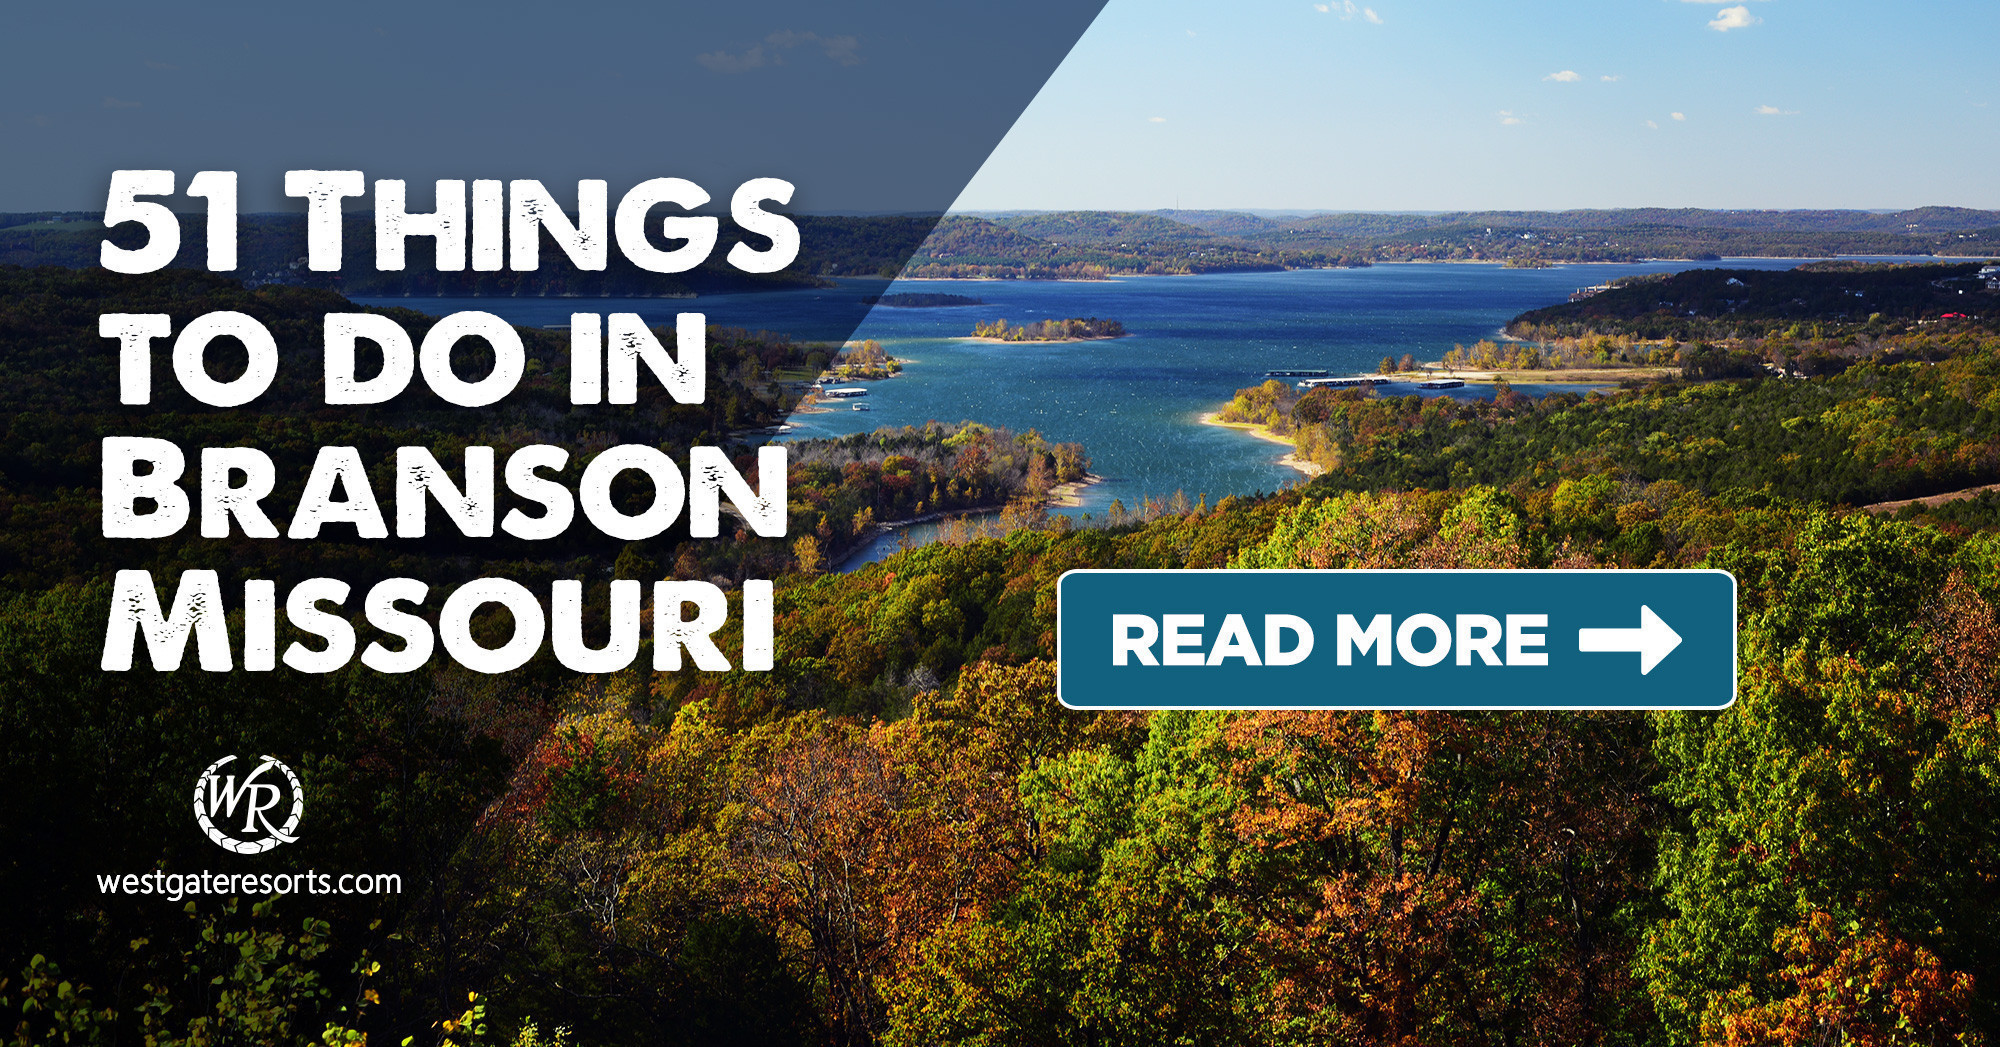 51 Things to do in Branson Missouri